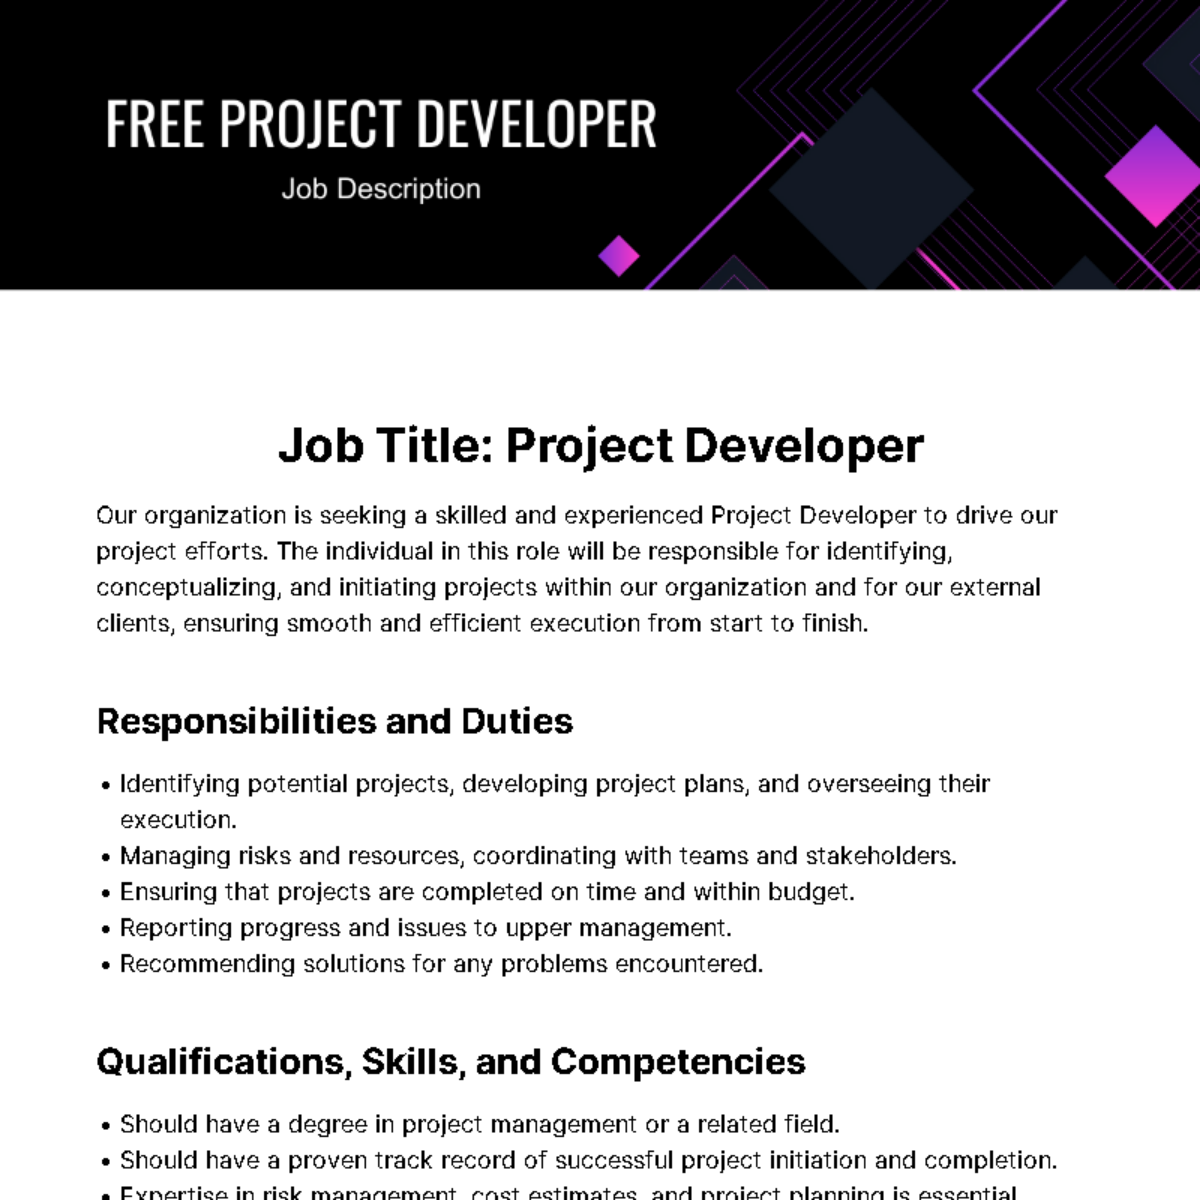 Free Project Developer Job Description Template